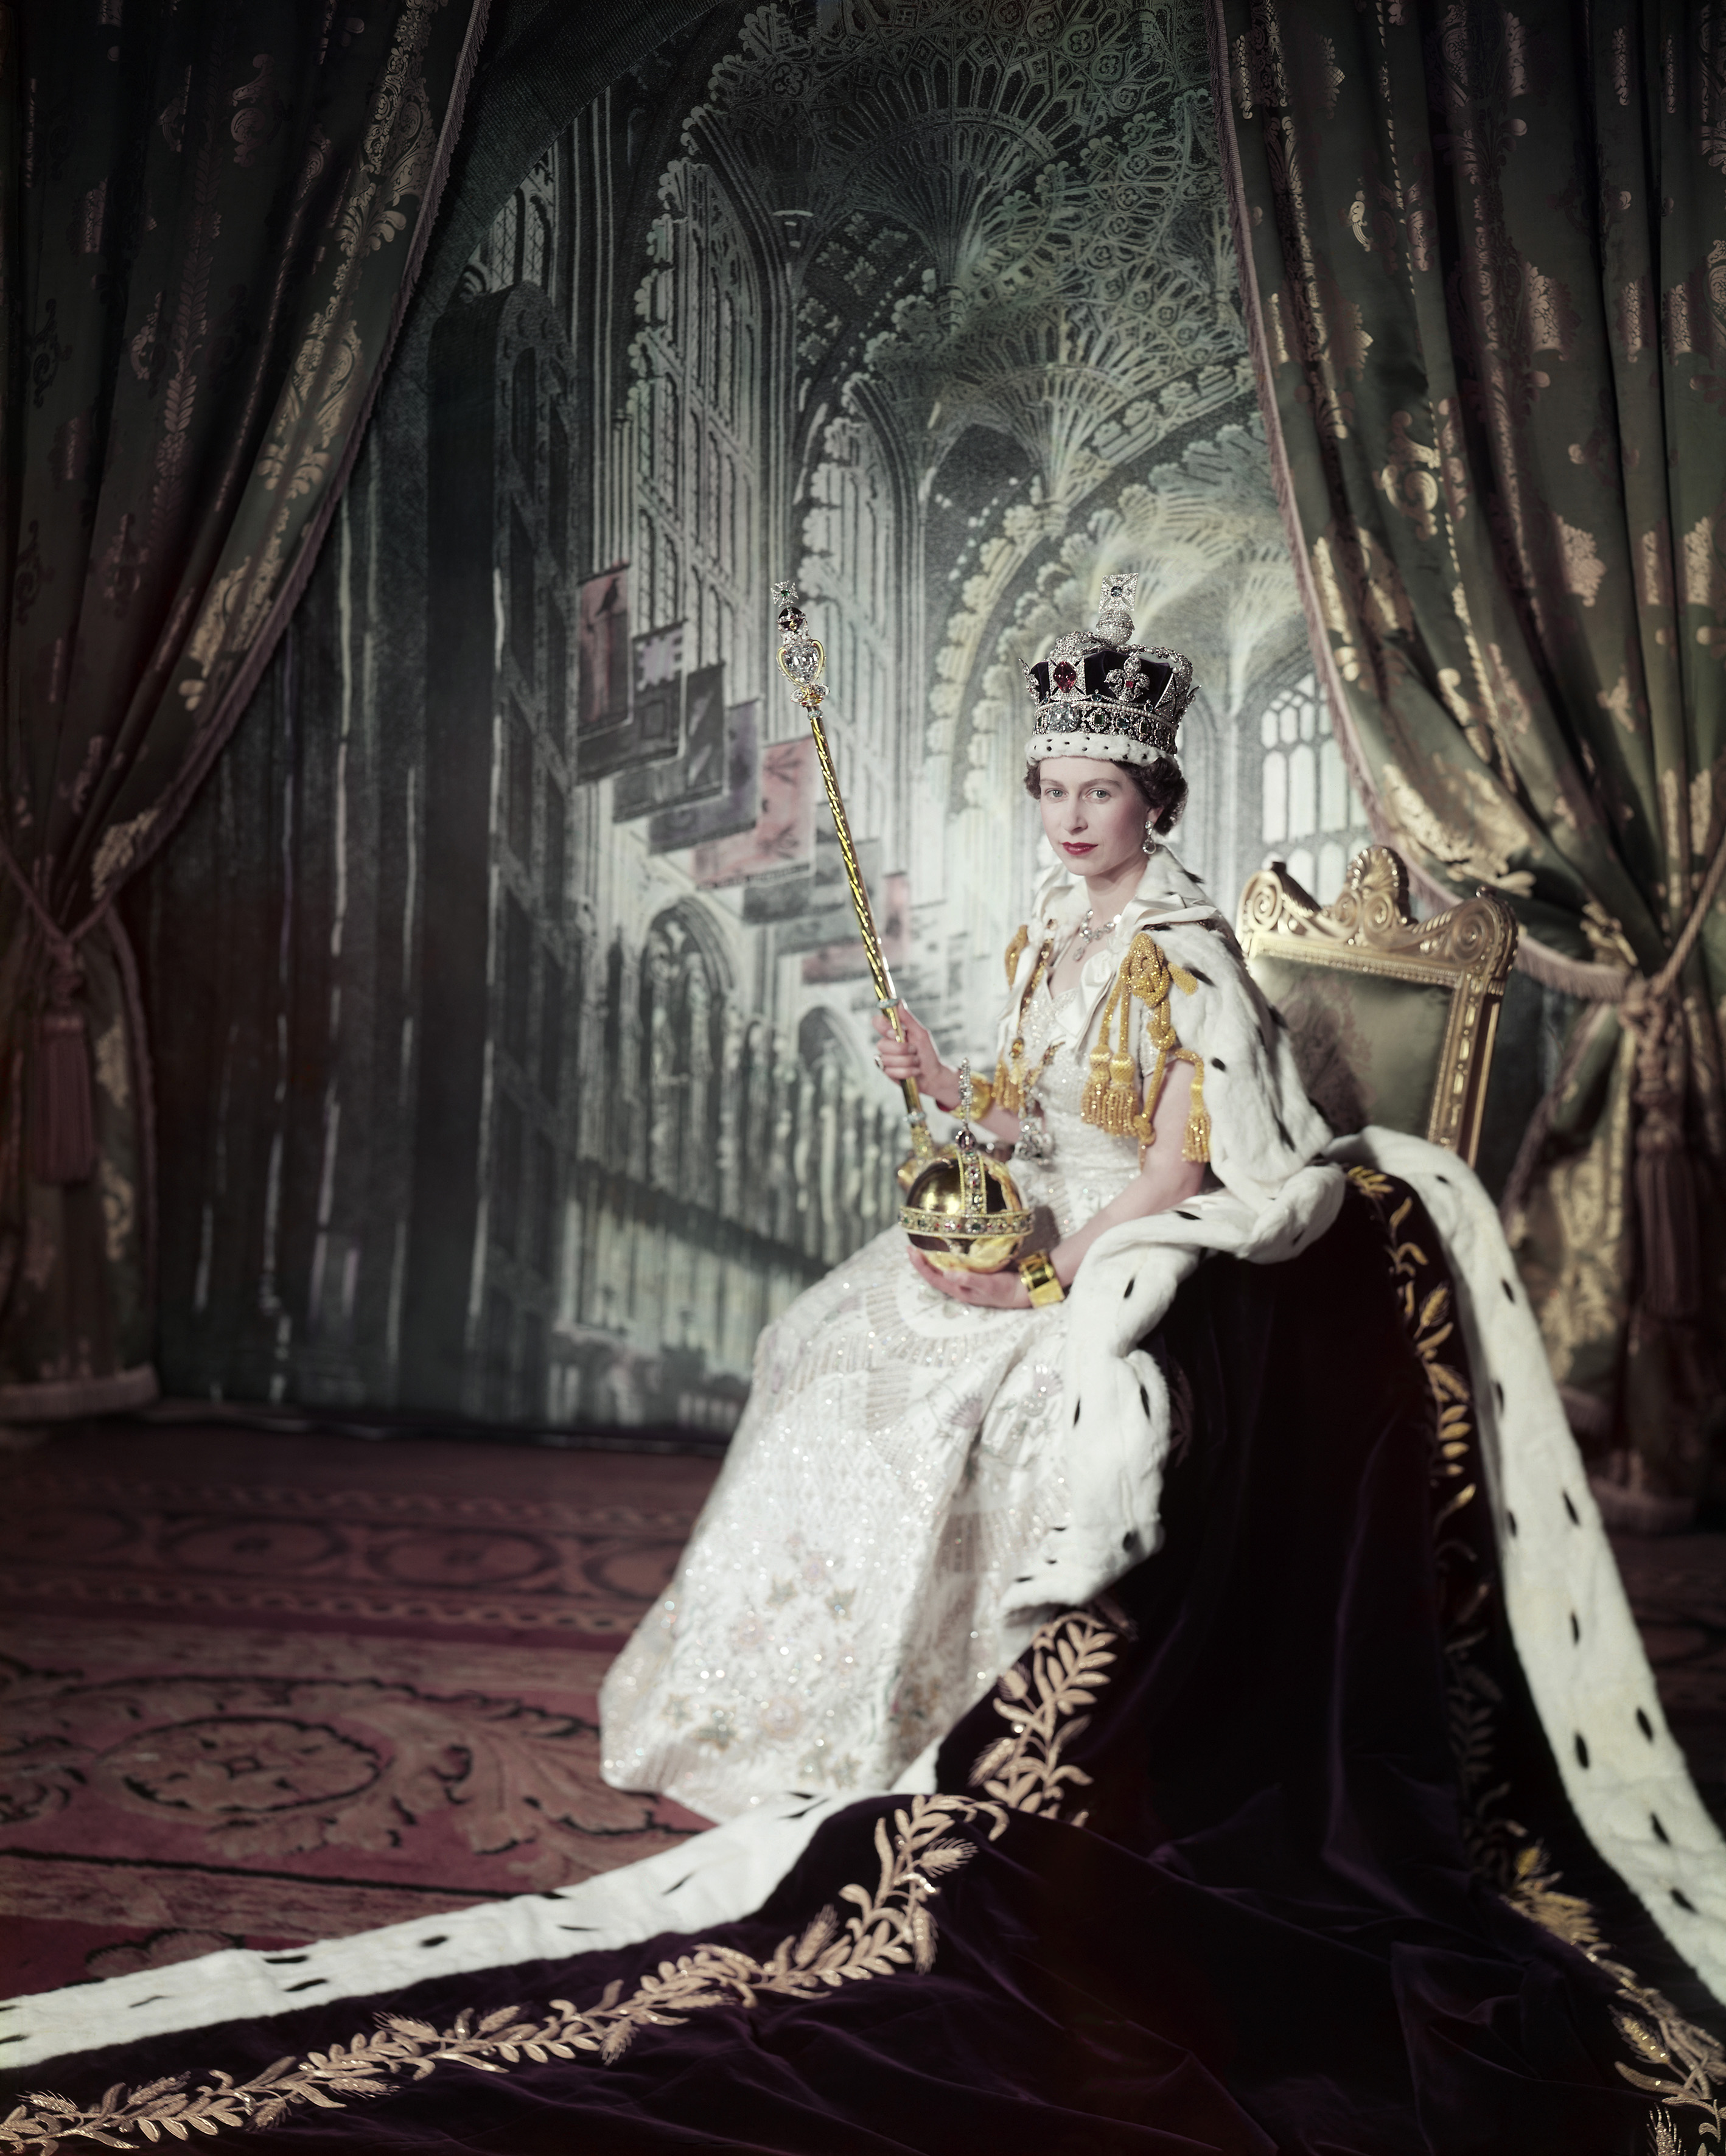 Cecil Beaton's portrait of Queen Elizabeth II on her Coronation Day in 1953